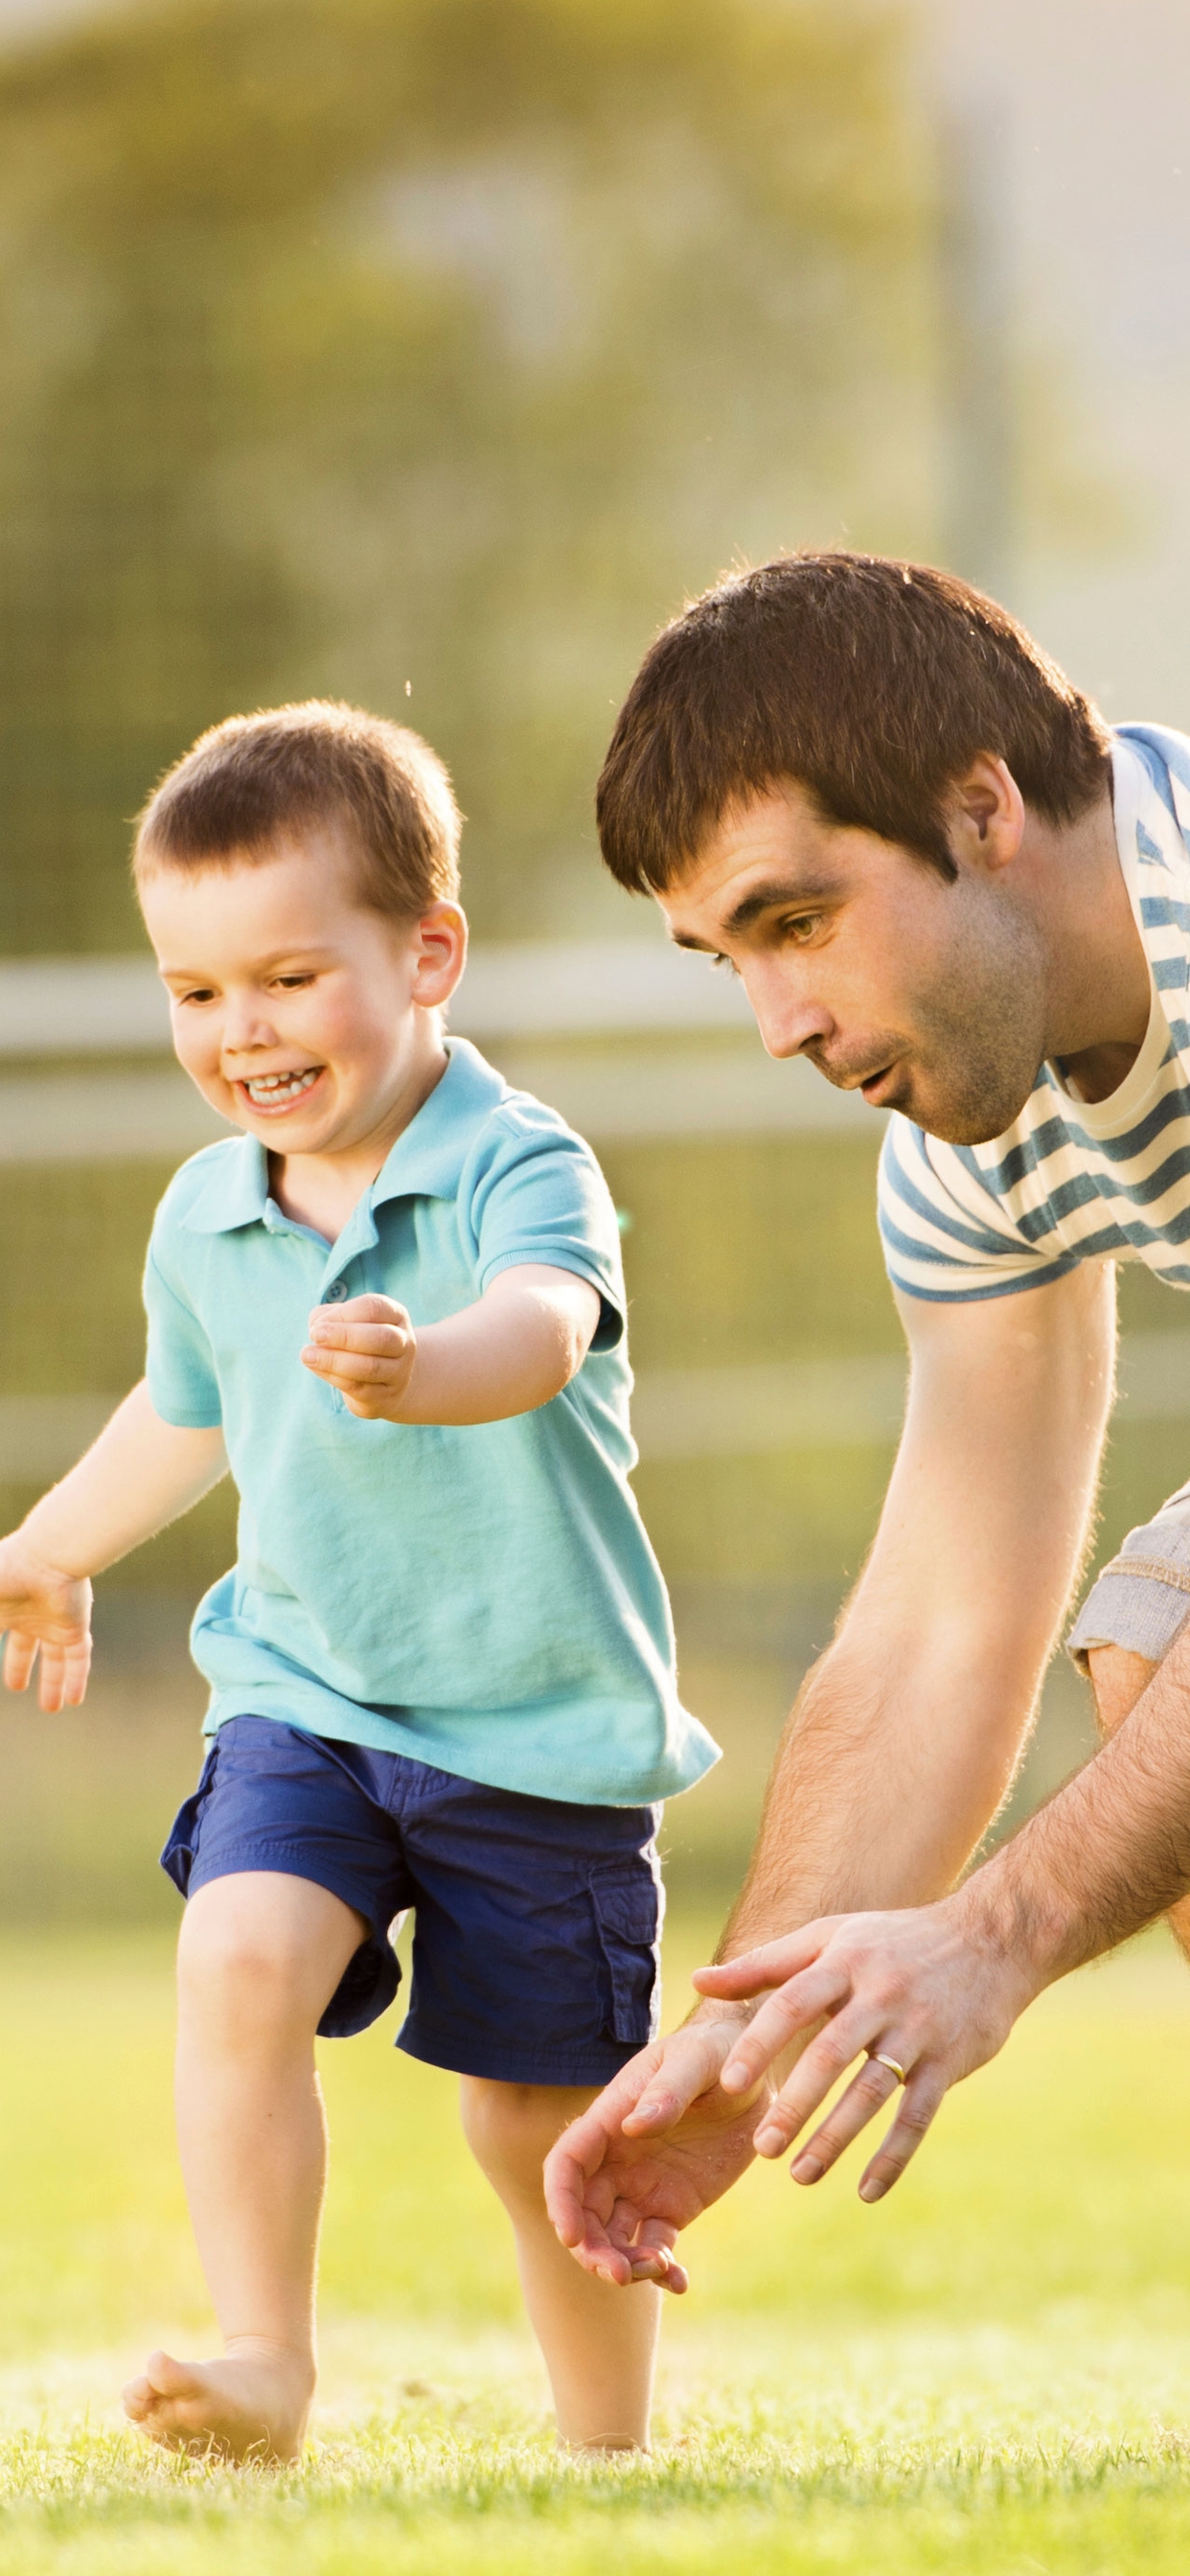 Картинка: Мужчина, ребёнок, отец, сын, игра, мяч, футбол, ворота, бег, развлечение